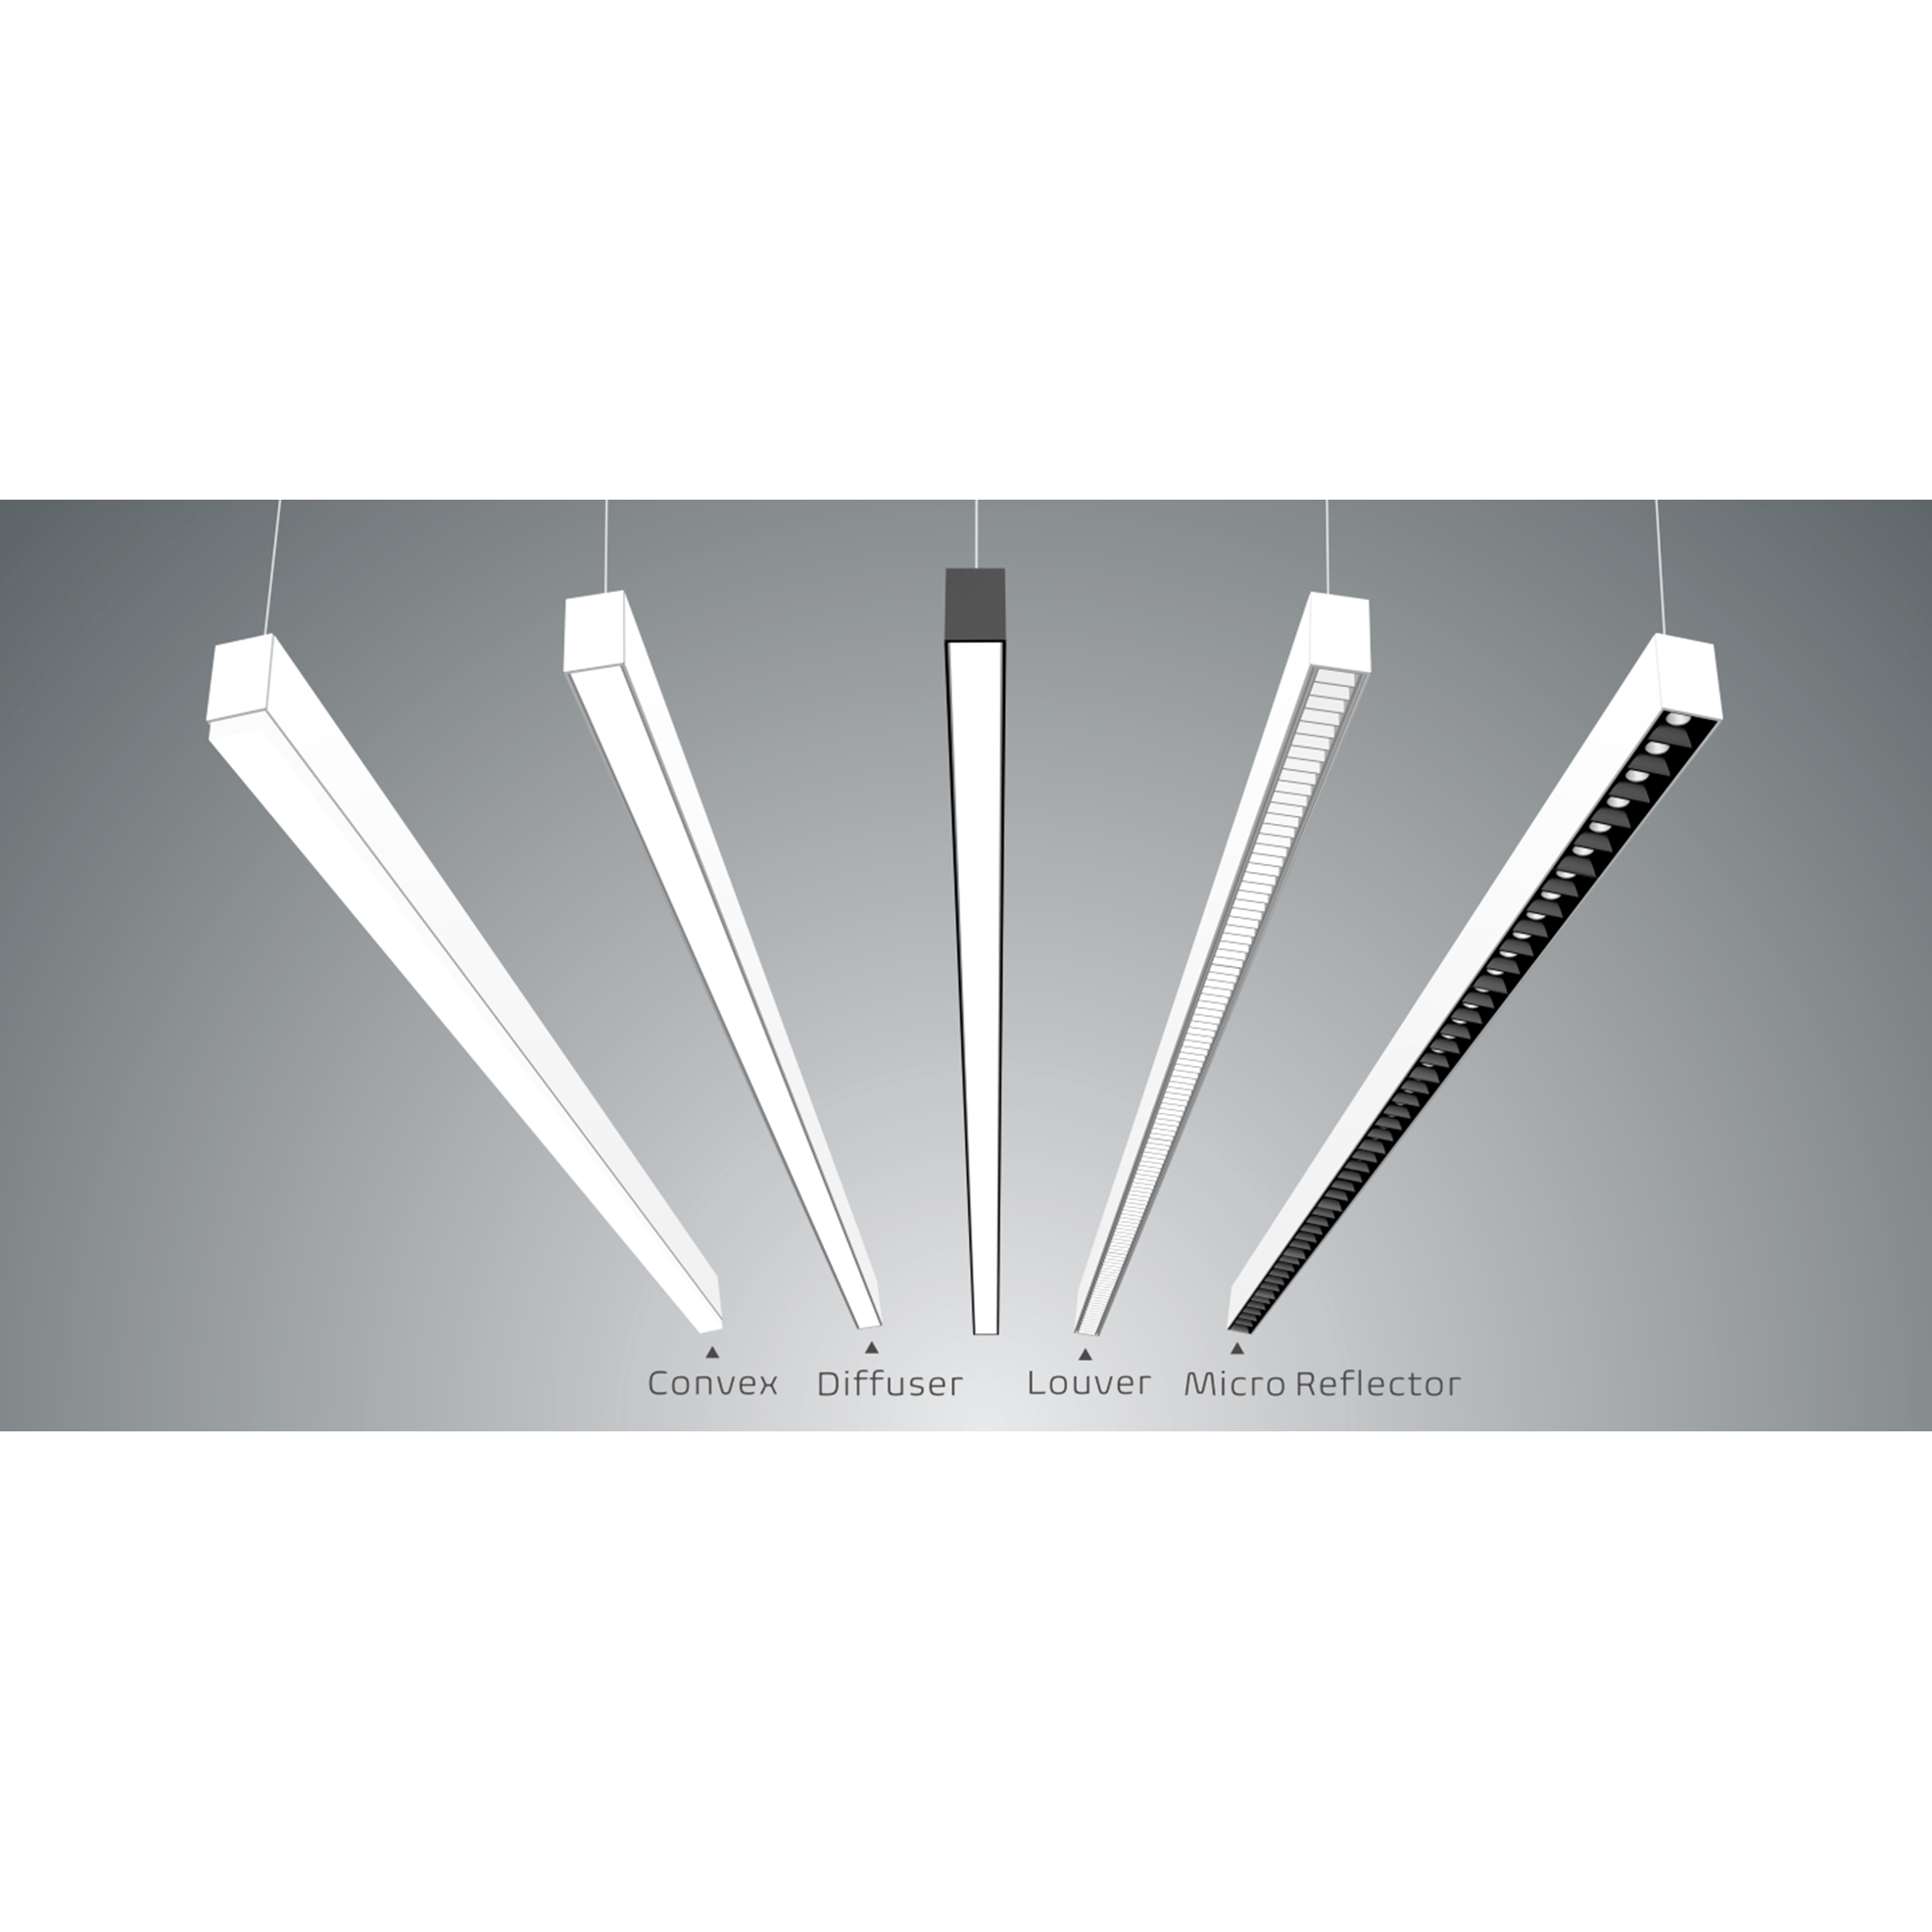 POE Texas Lighting Denton Suspended Linear PoE Lights - Sample 1.3" x 4' Linear Diffuser 4 ft, 5000K (Surface)